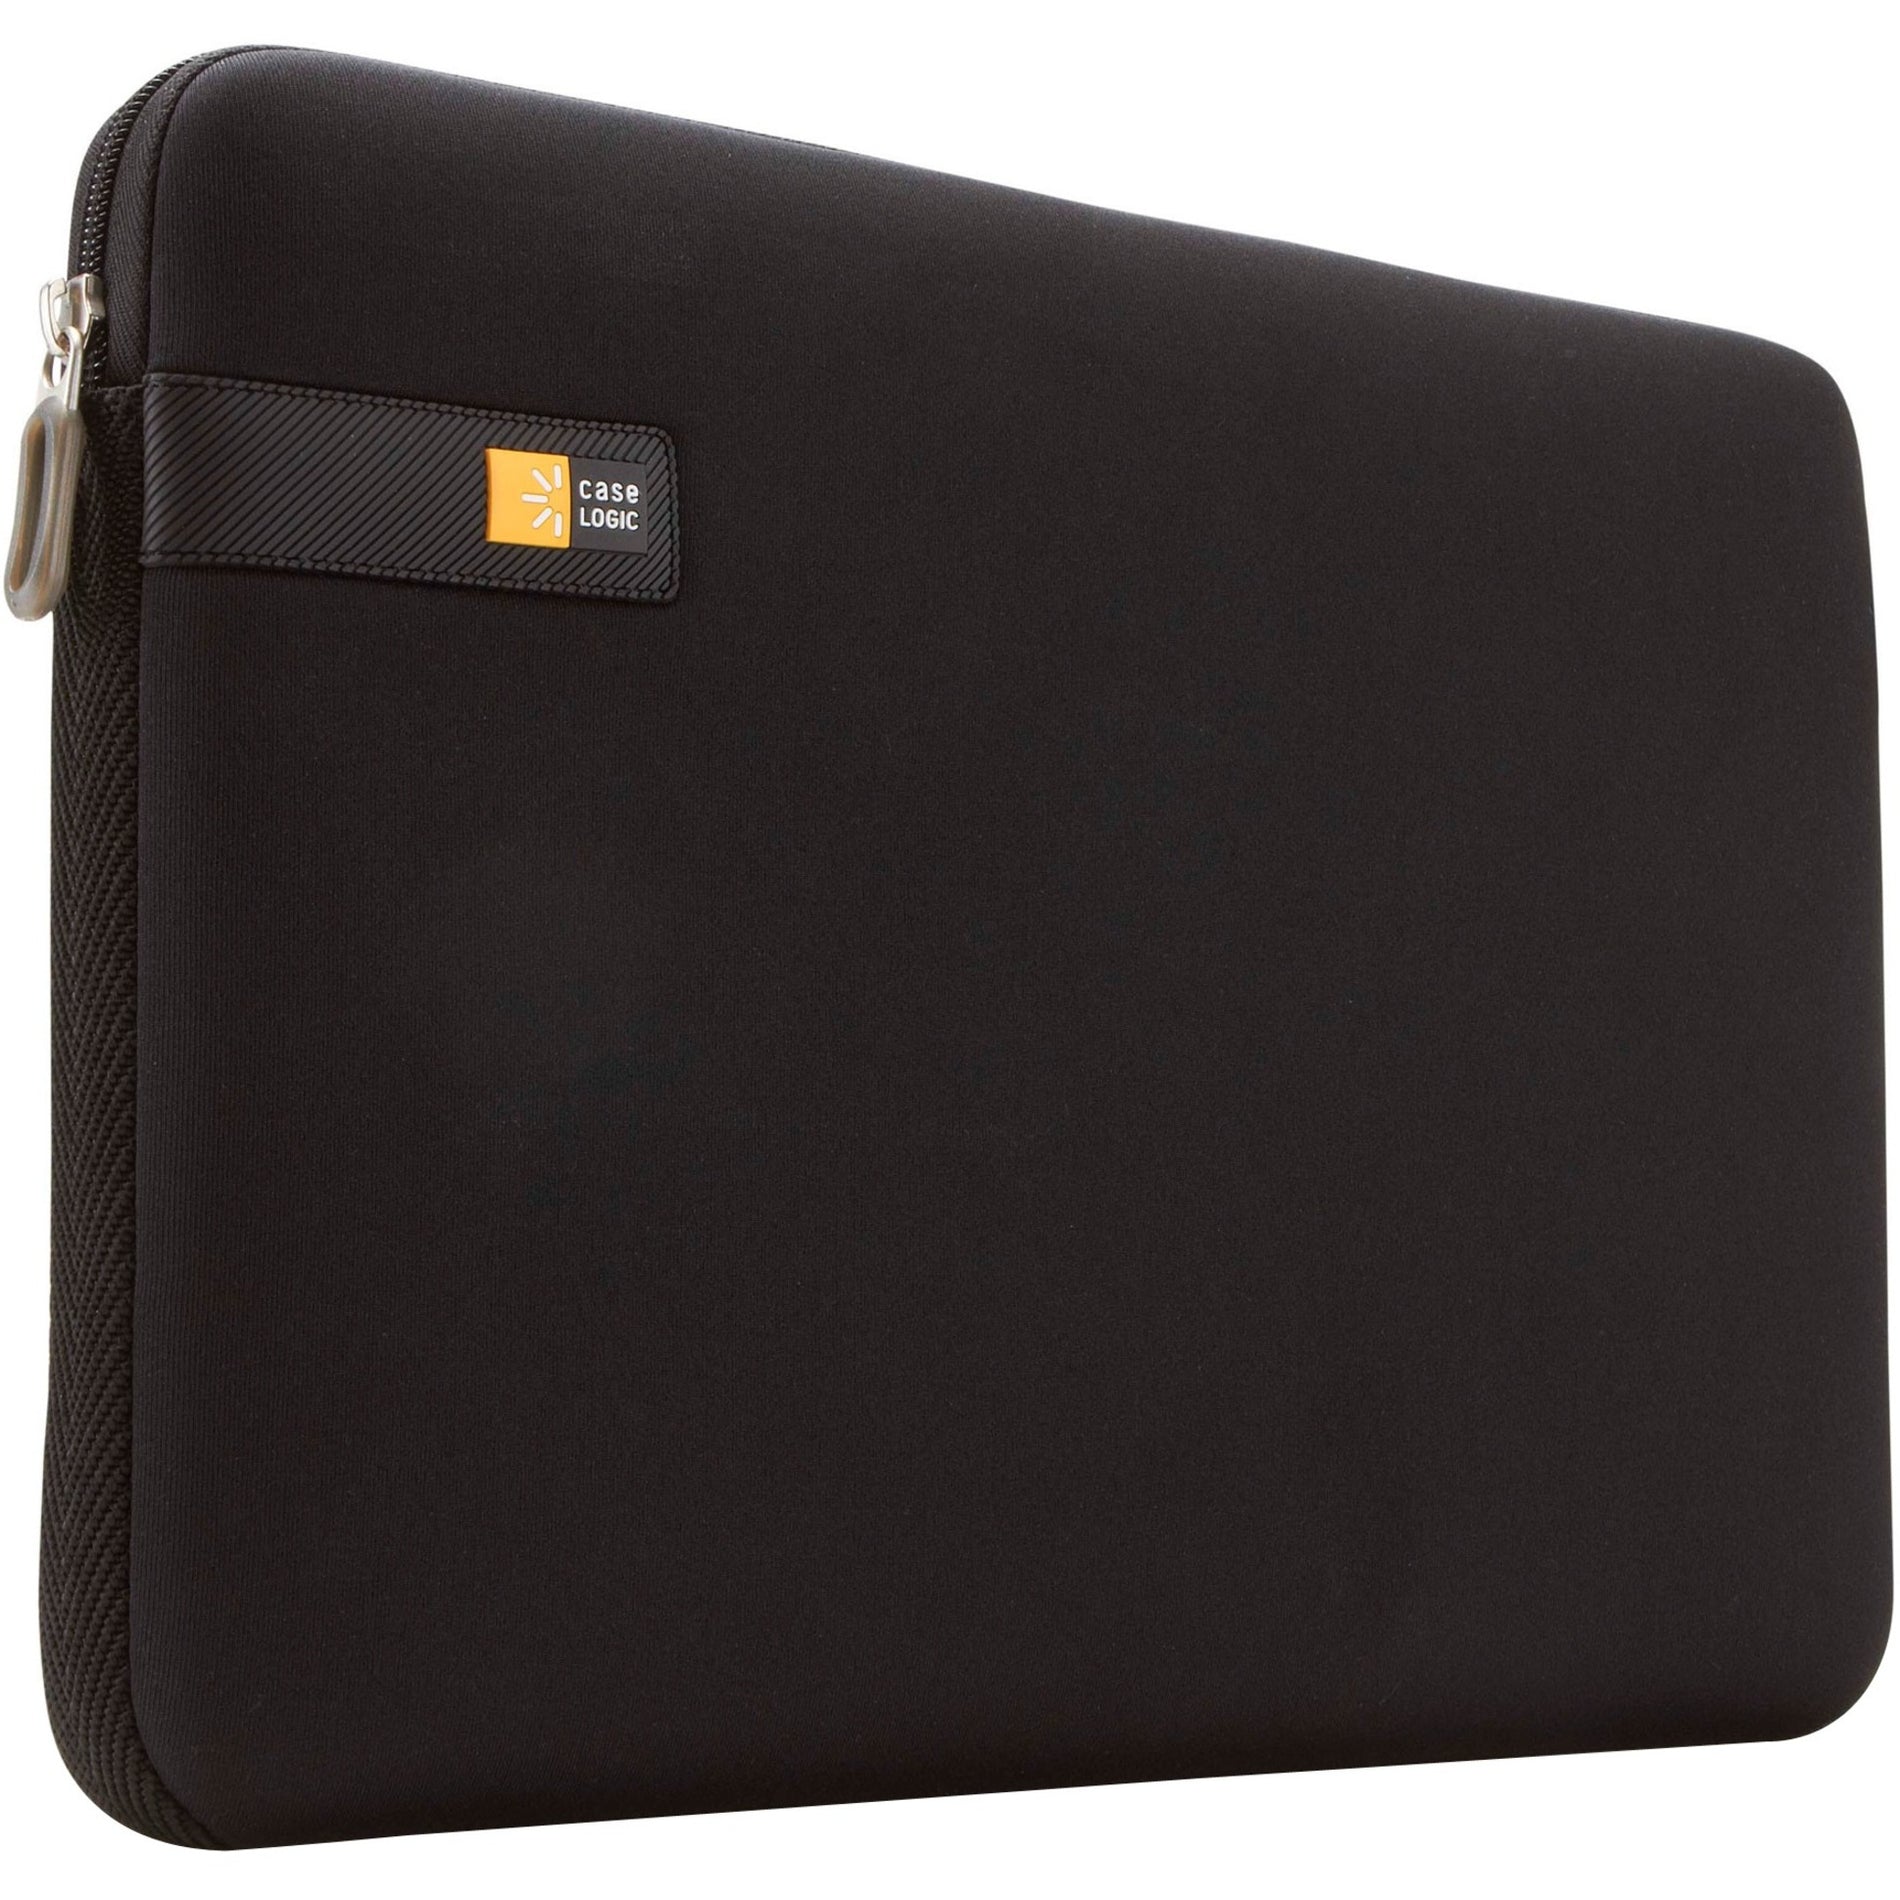 Case Logic 3201354 14" Laptop Sleeve Sleek and Protective Black Carrying Case Discontinued  ブランド名：ケースロジック ケース ロジック 3201354 14" ラップトップ スリーブ、スリークで保護力のあるブラック キャリング ケース【販売終了】